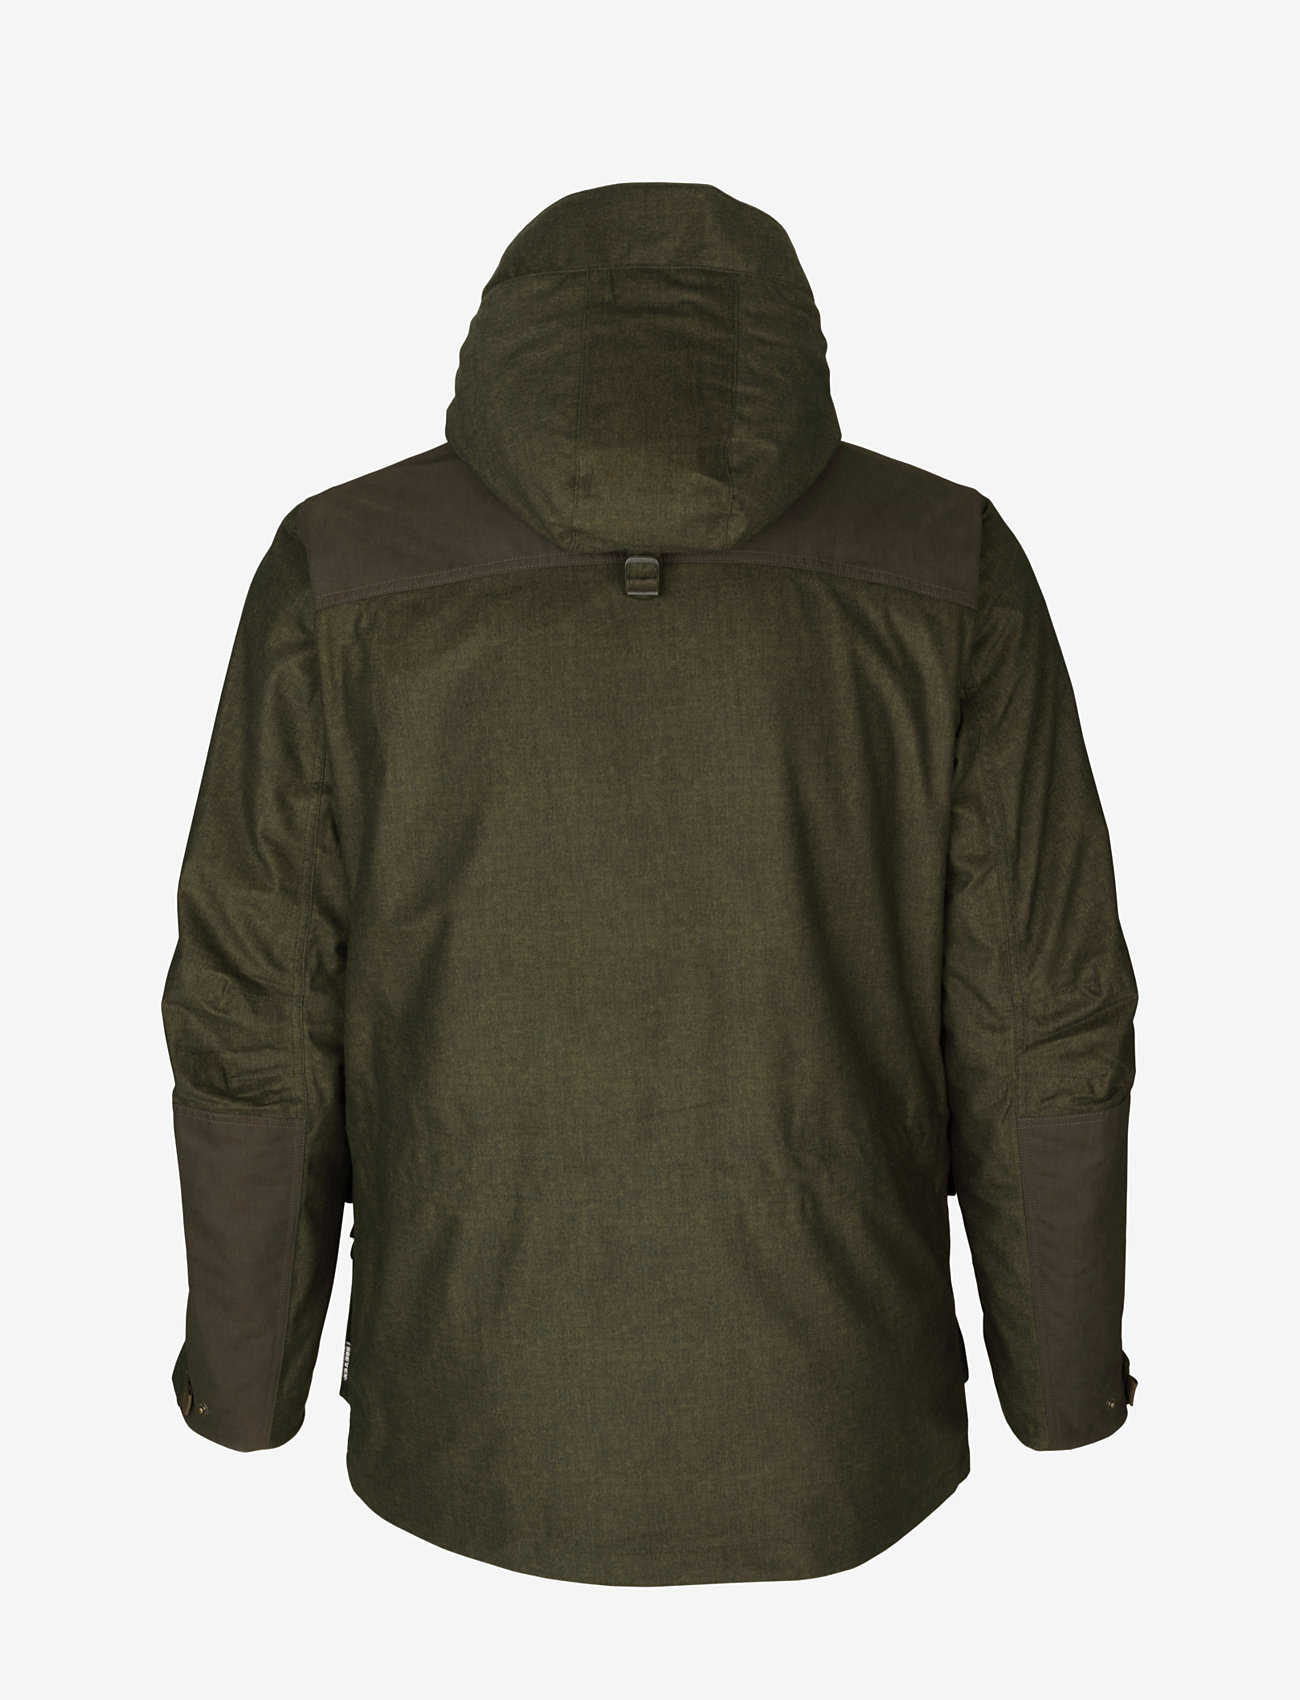 Seeland - North jacket - talvitakit - pine green - 1